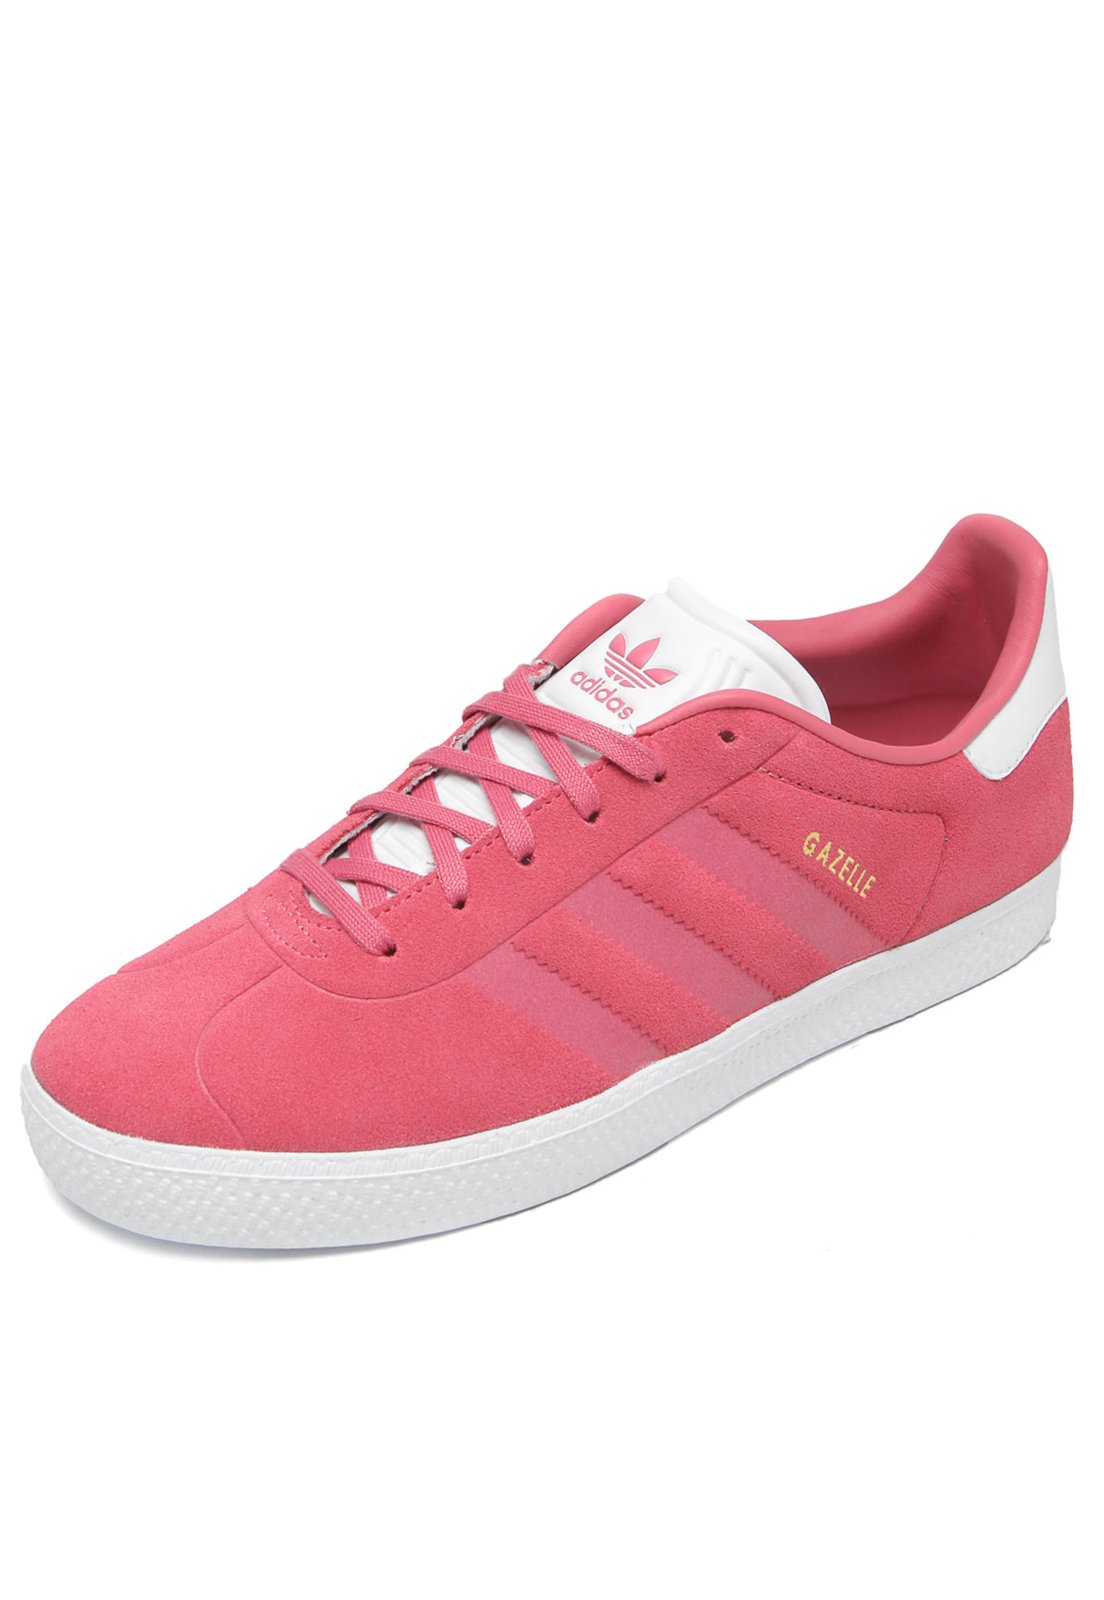 tenis adidas gazelle feminino rosa